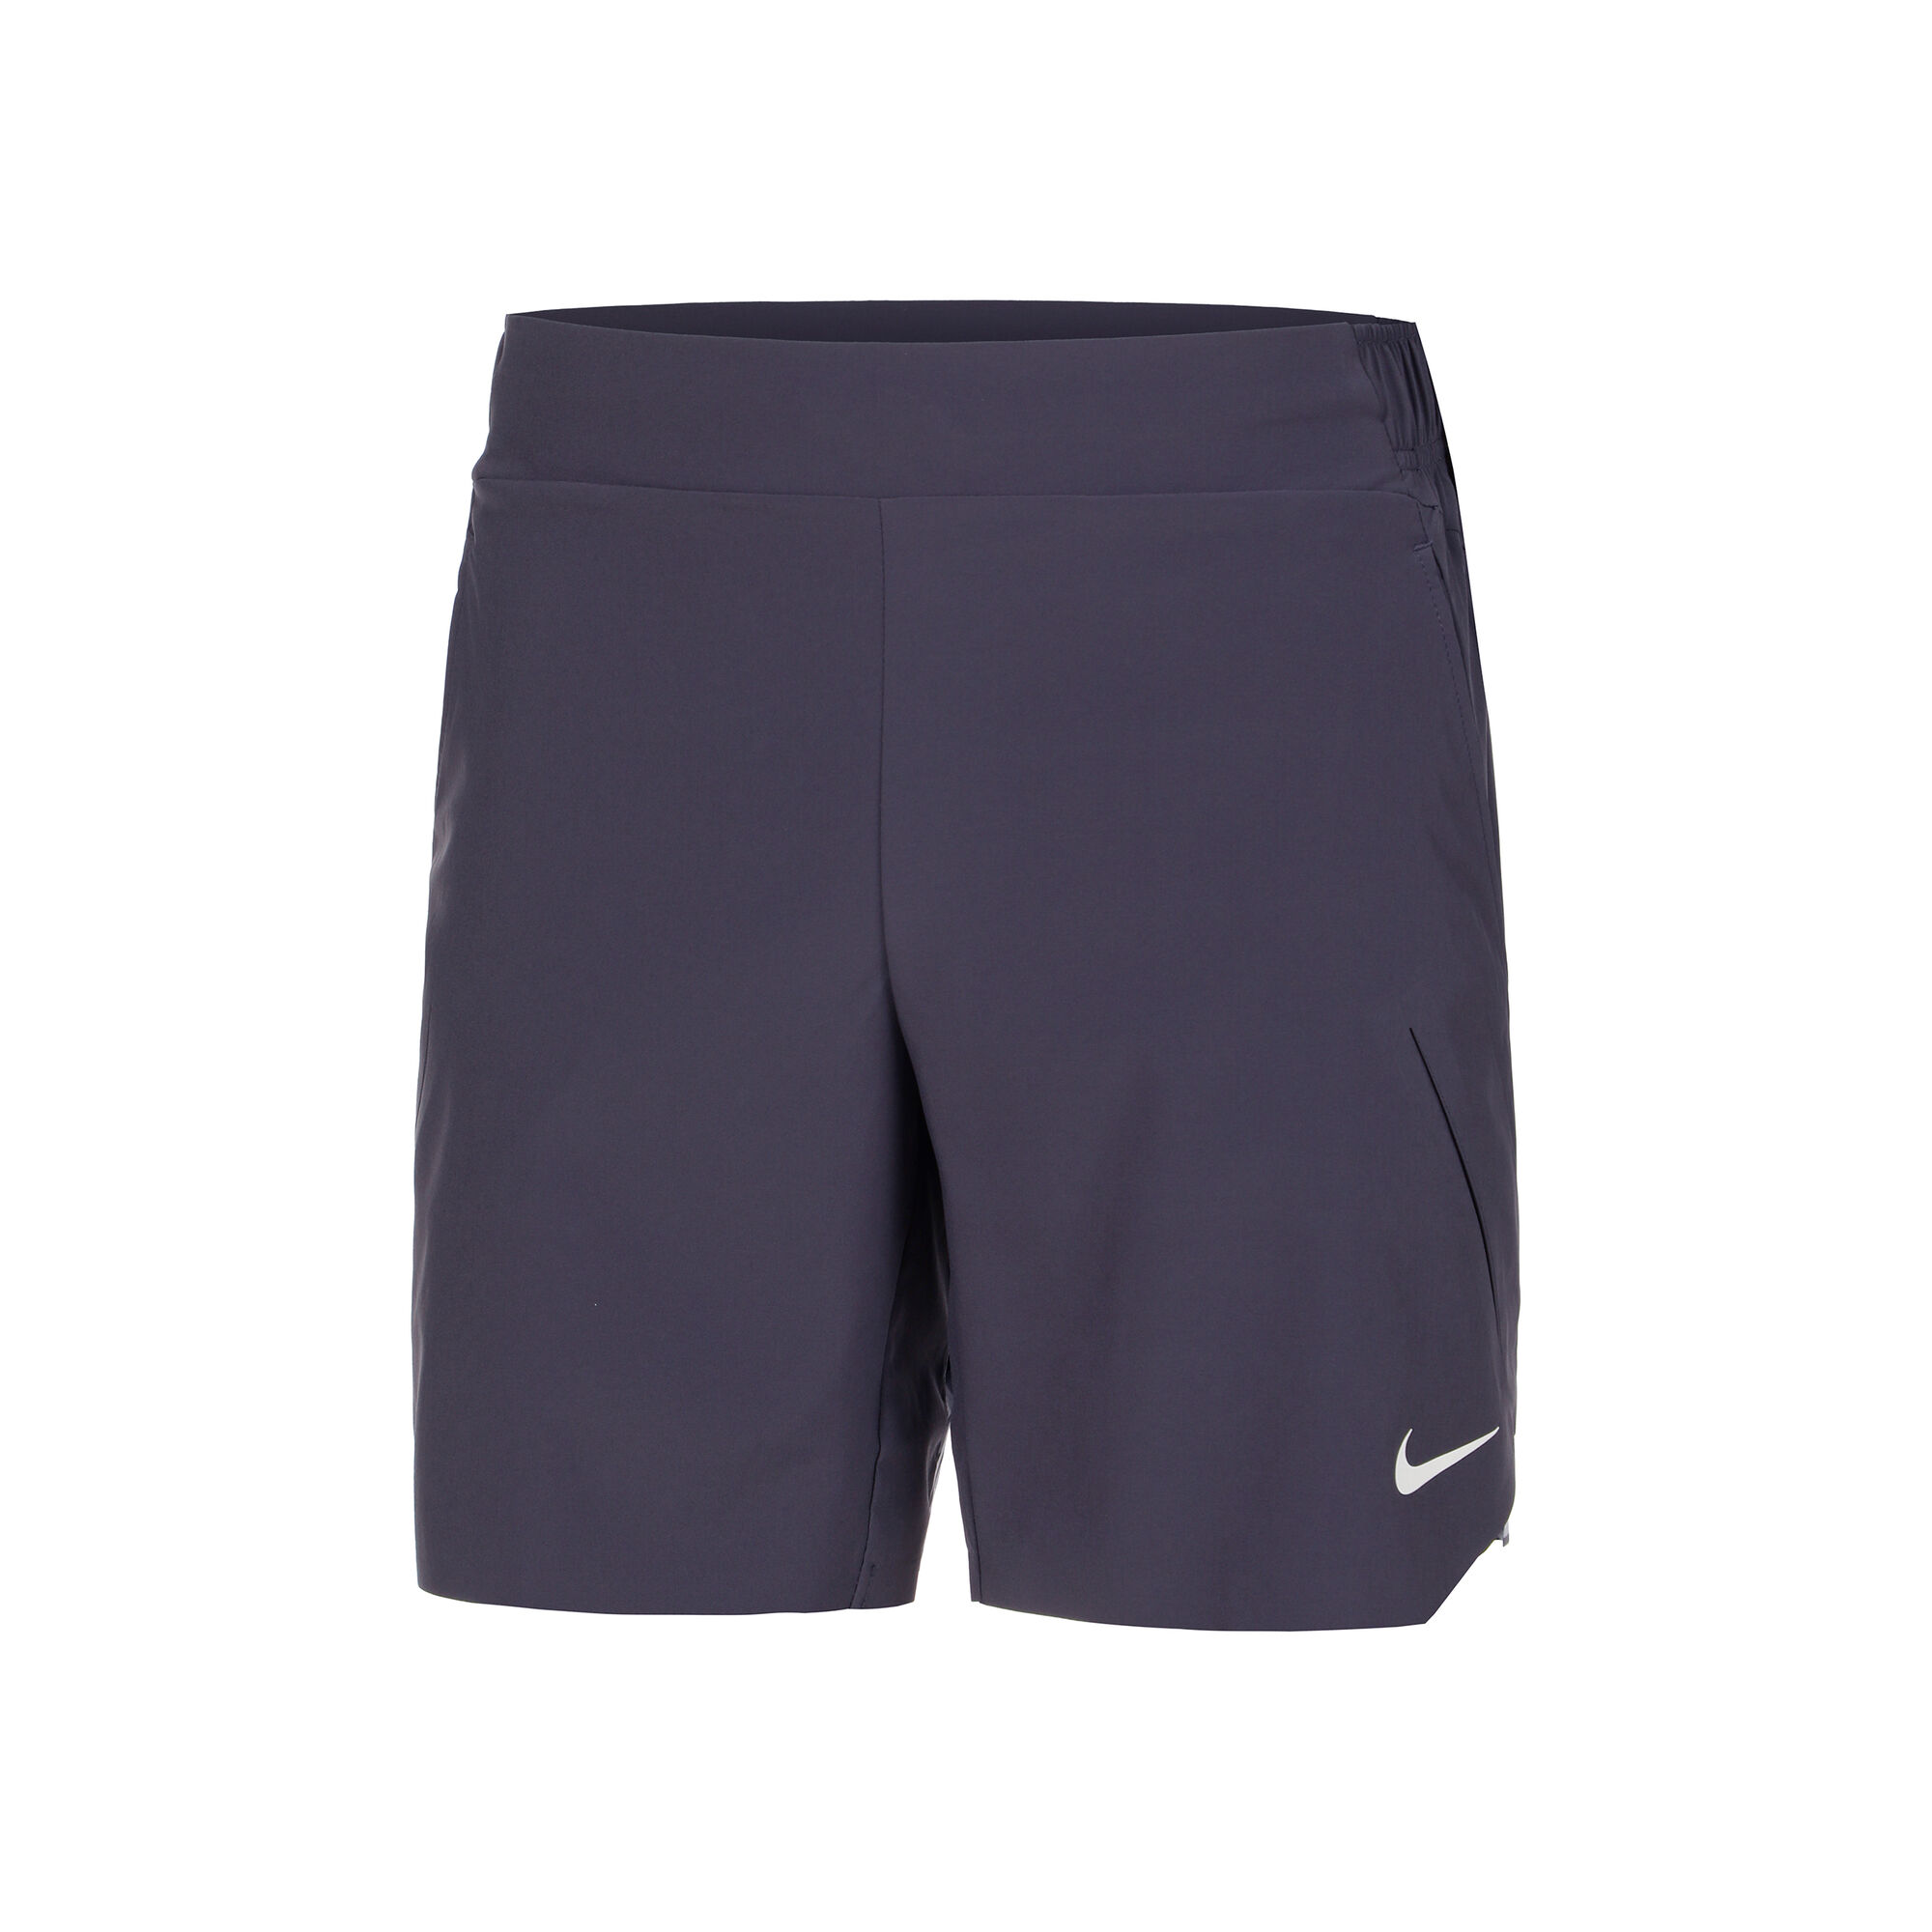 Buy Nike Dri-Fit Court Slam Shorts Men Mint online